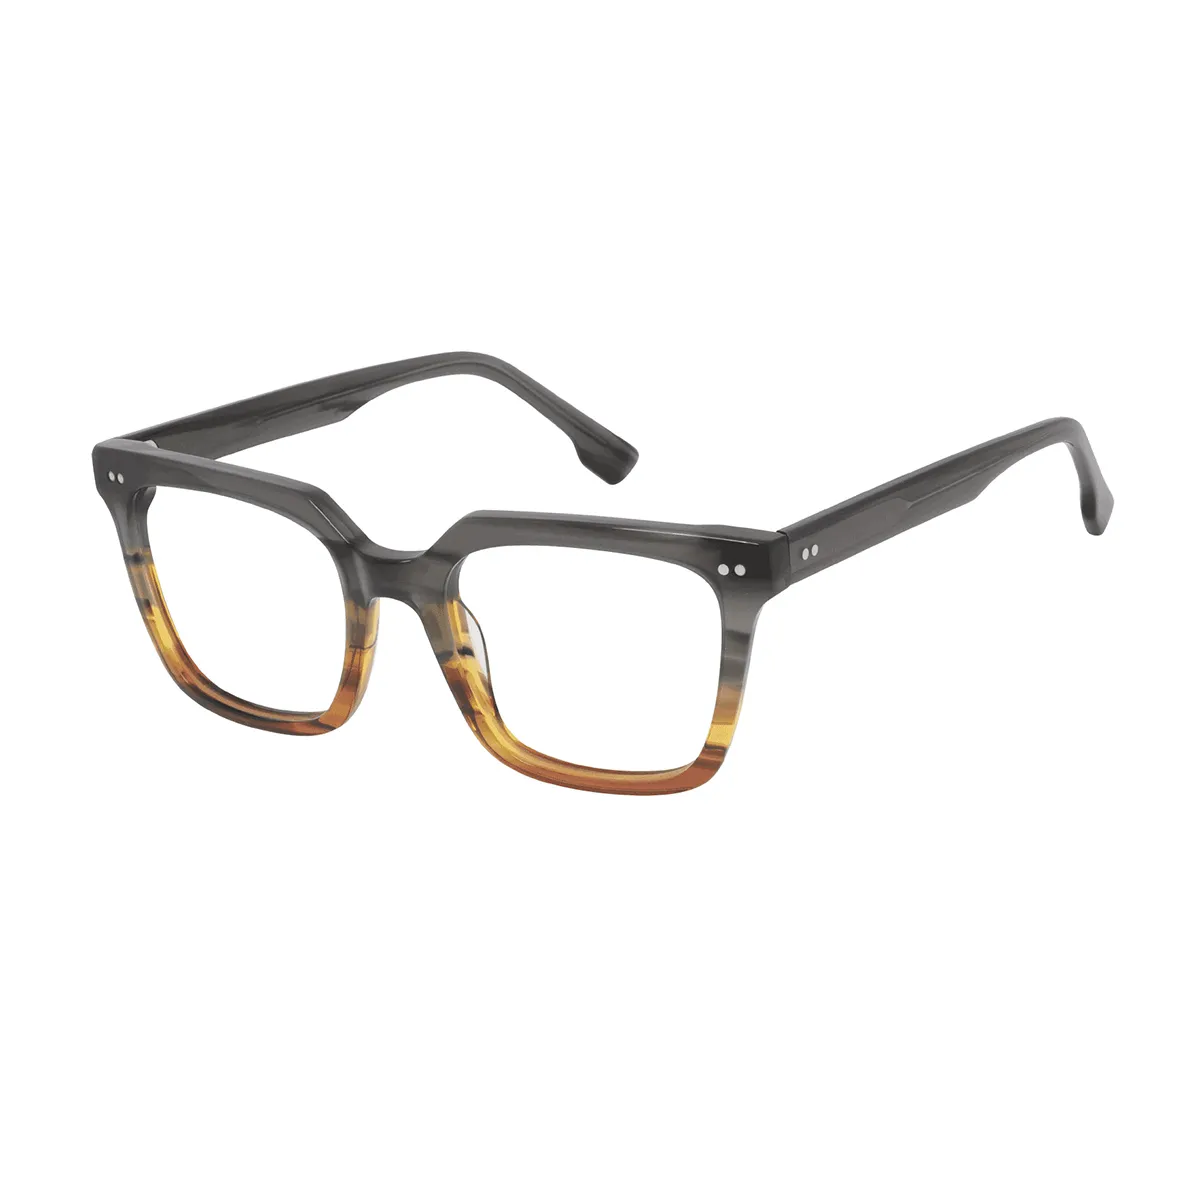 Fashion Square Gray-Brown Glasses for Men & Women